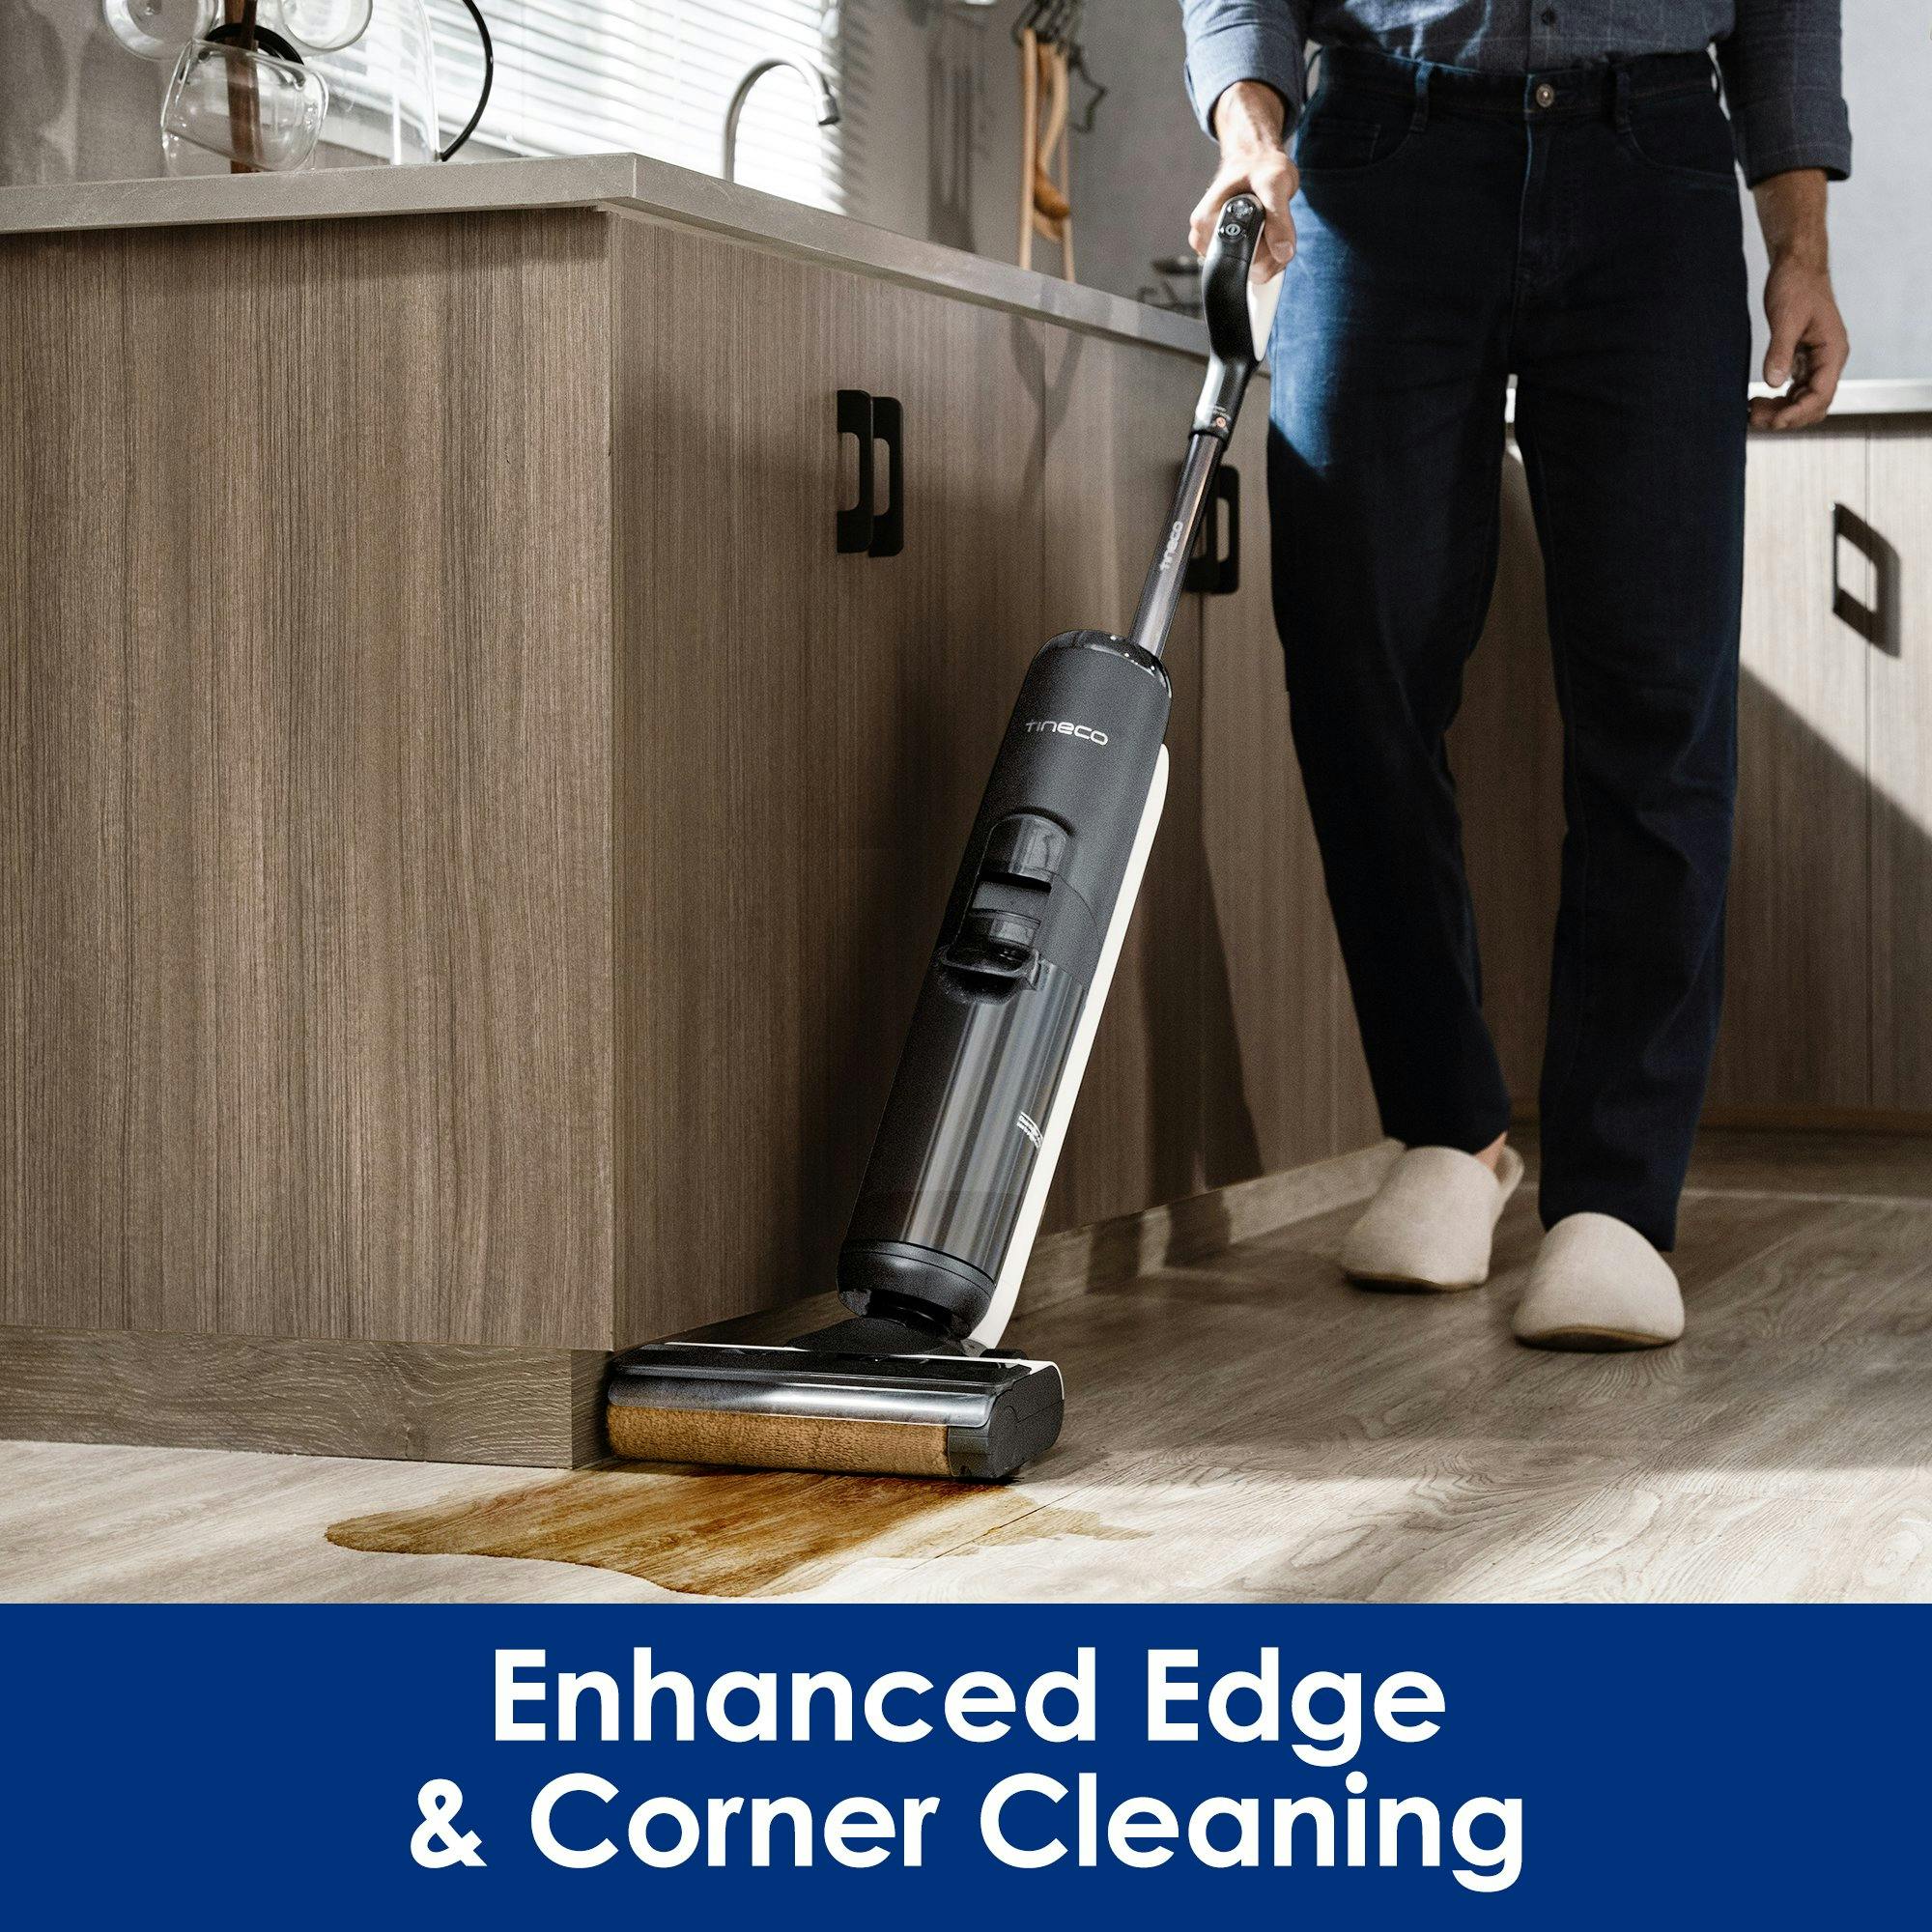 Tineco FLOOR ONE S5 Extreme: Smart Cordless Wet Dry Vacuum Cleaner